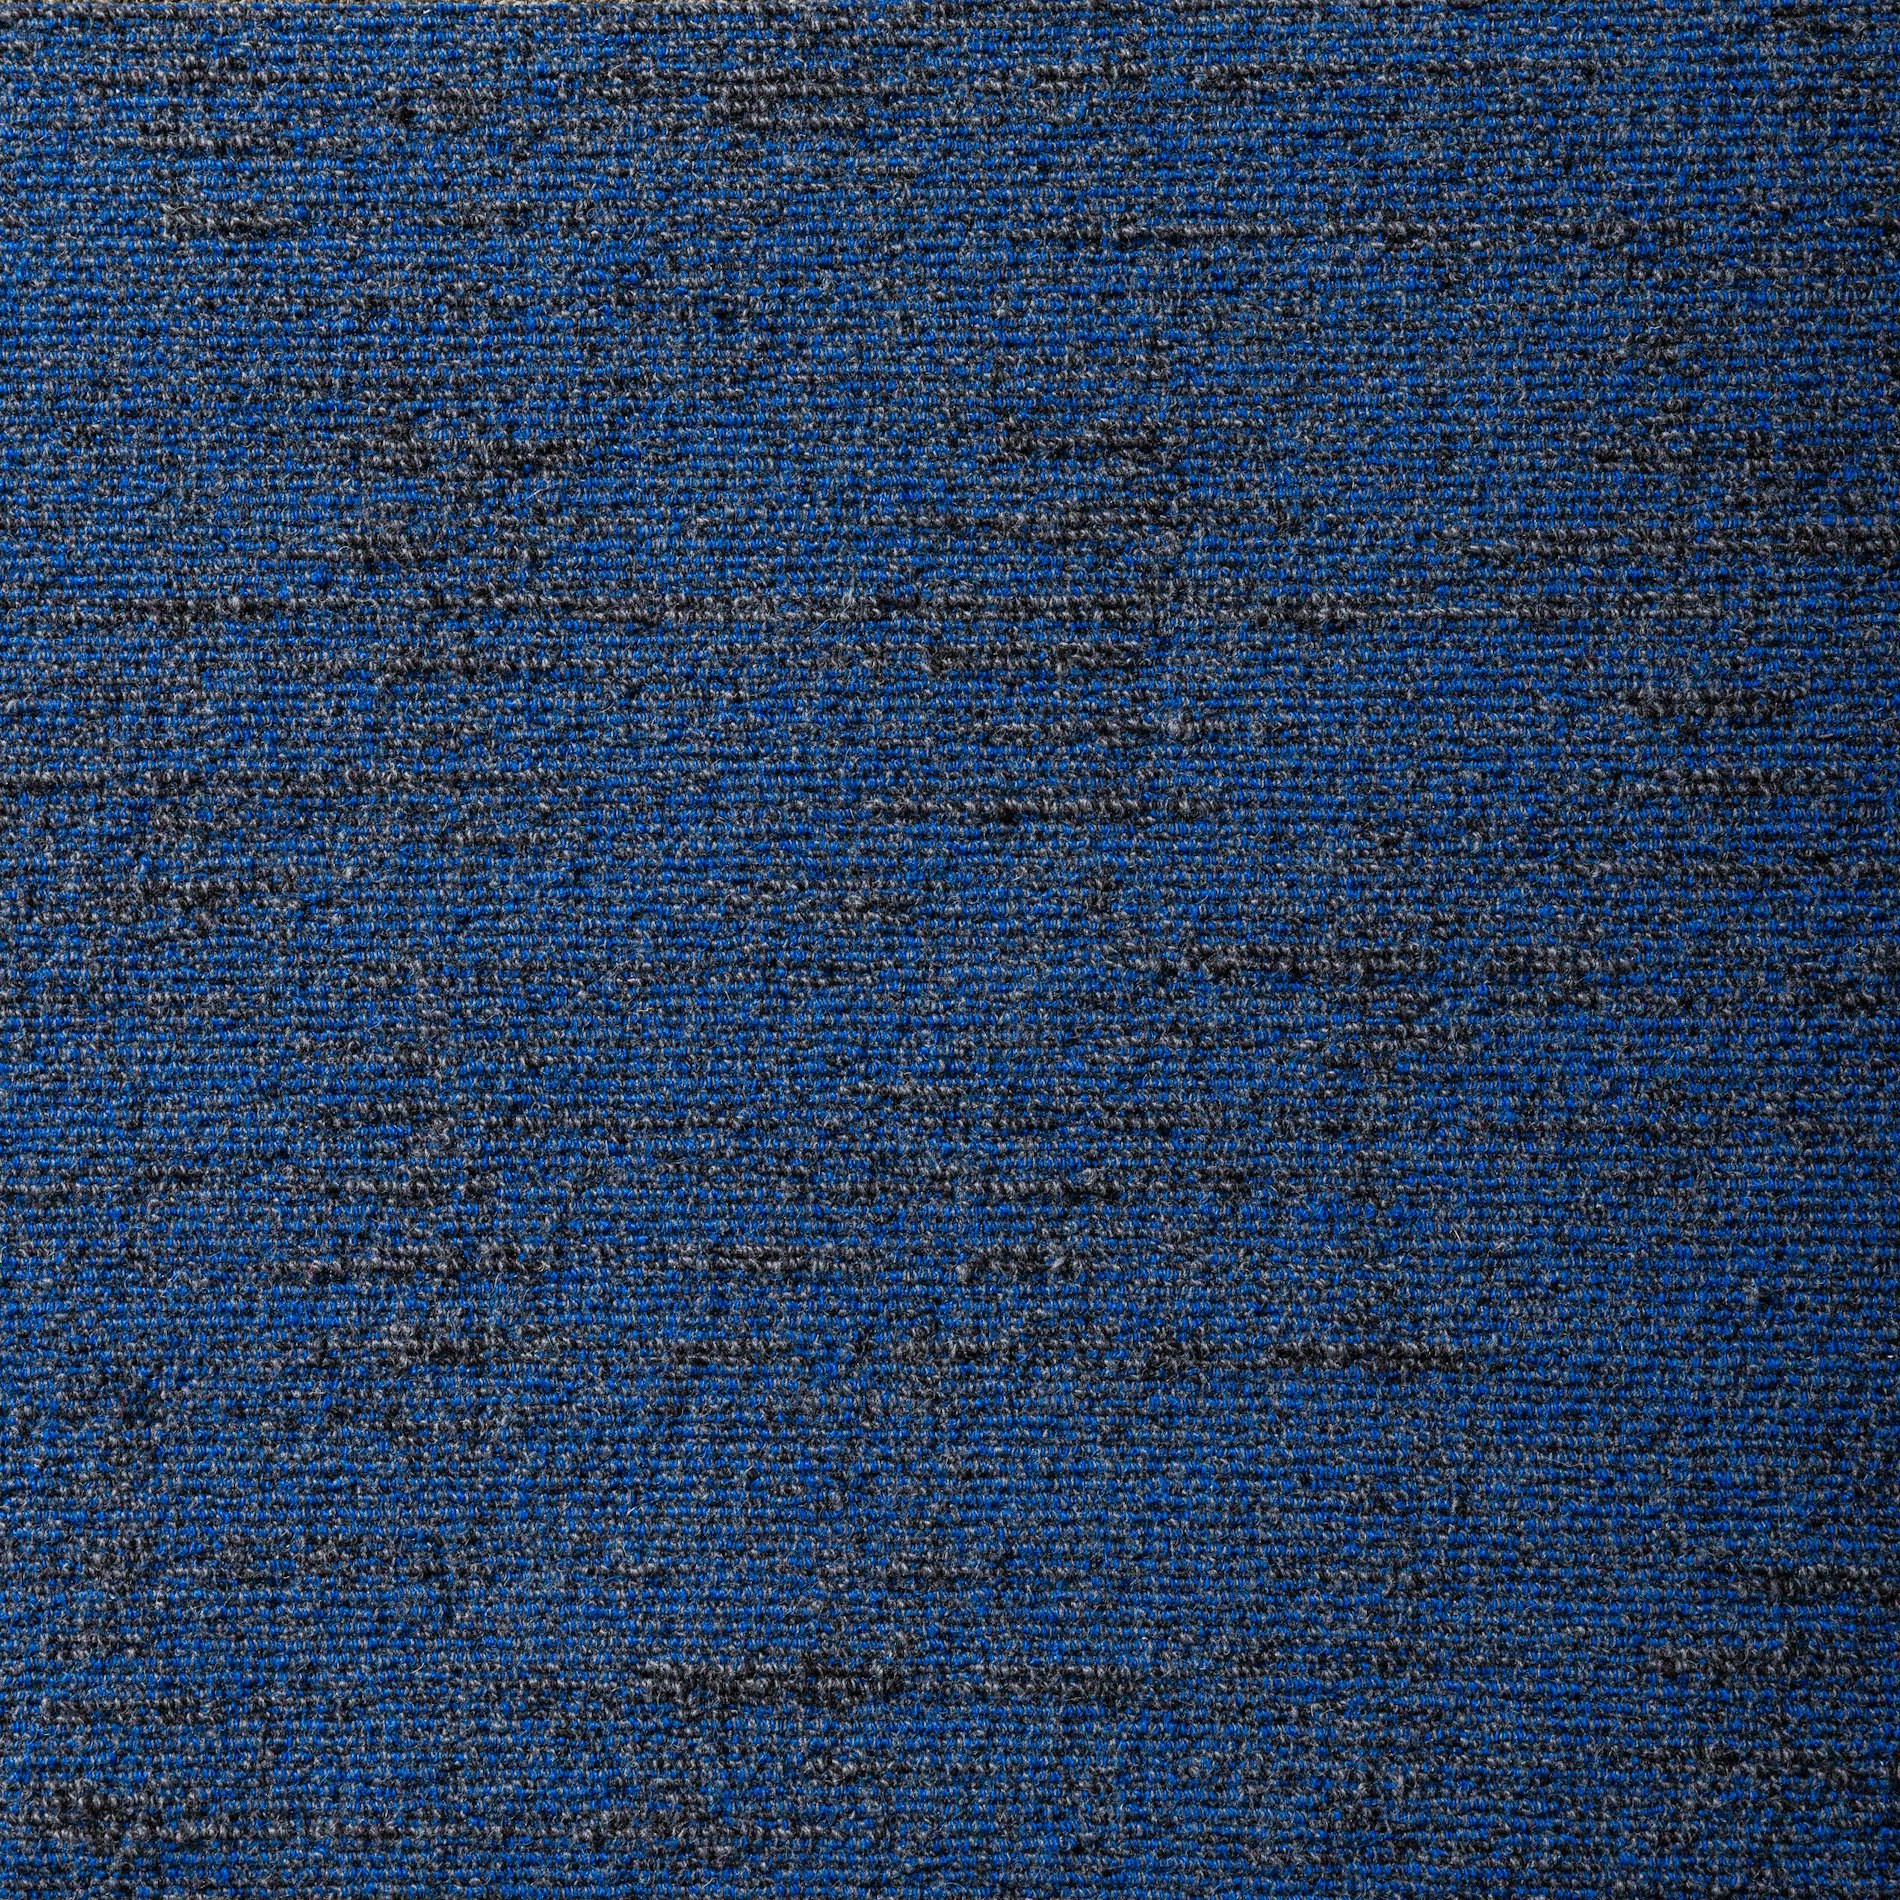 blue carpet tile